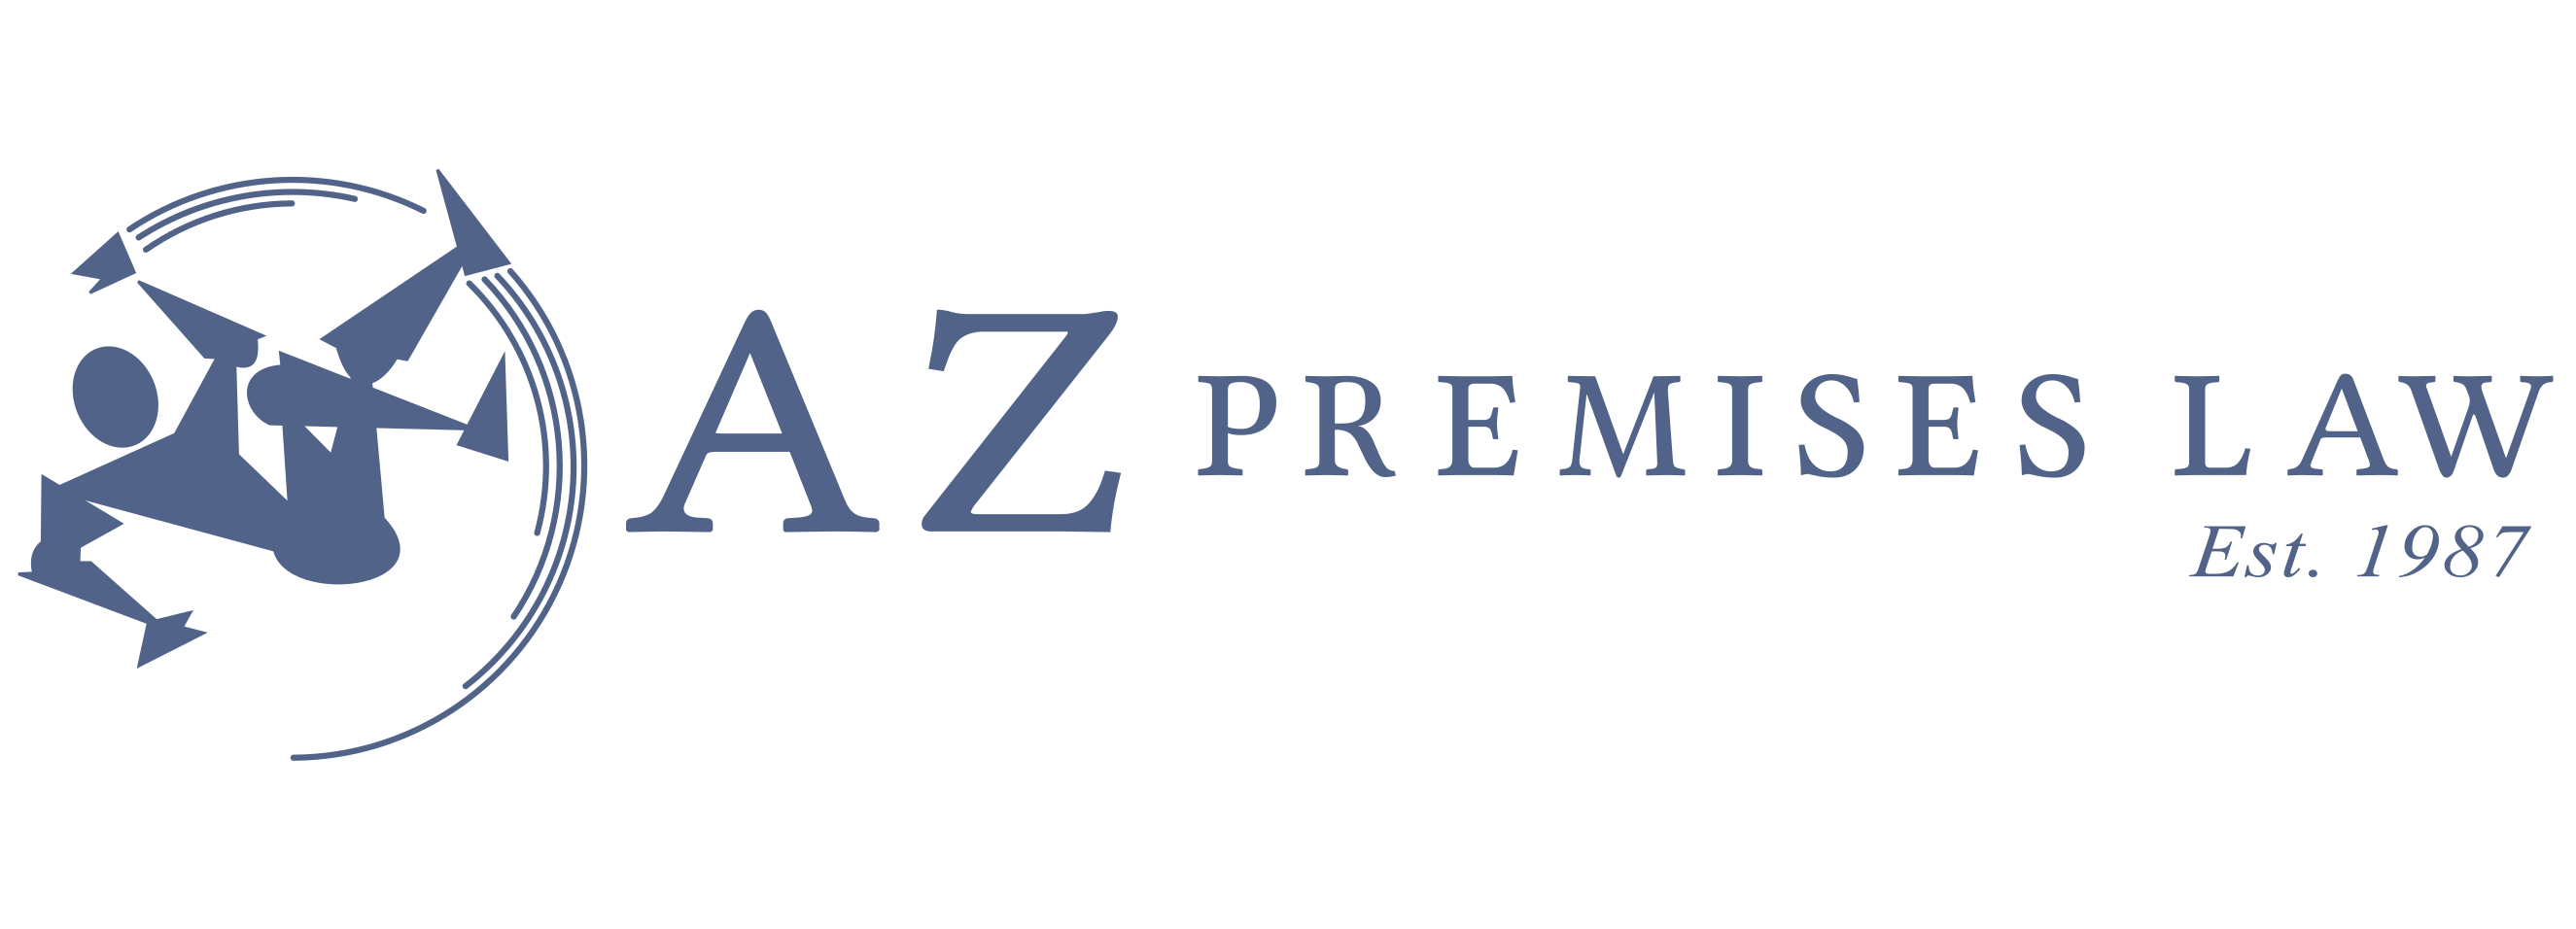 AZ Premises Law